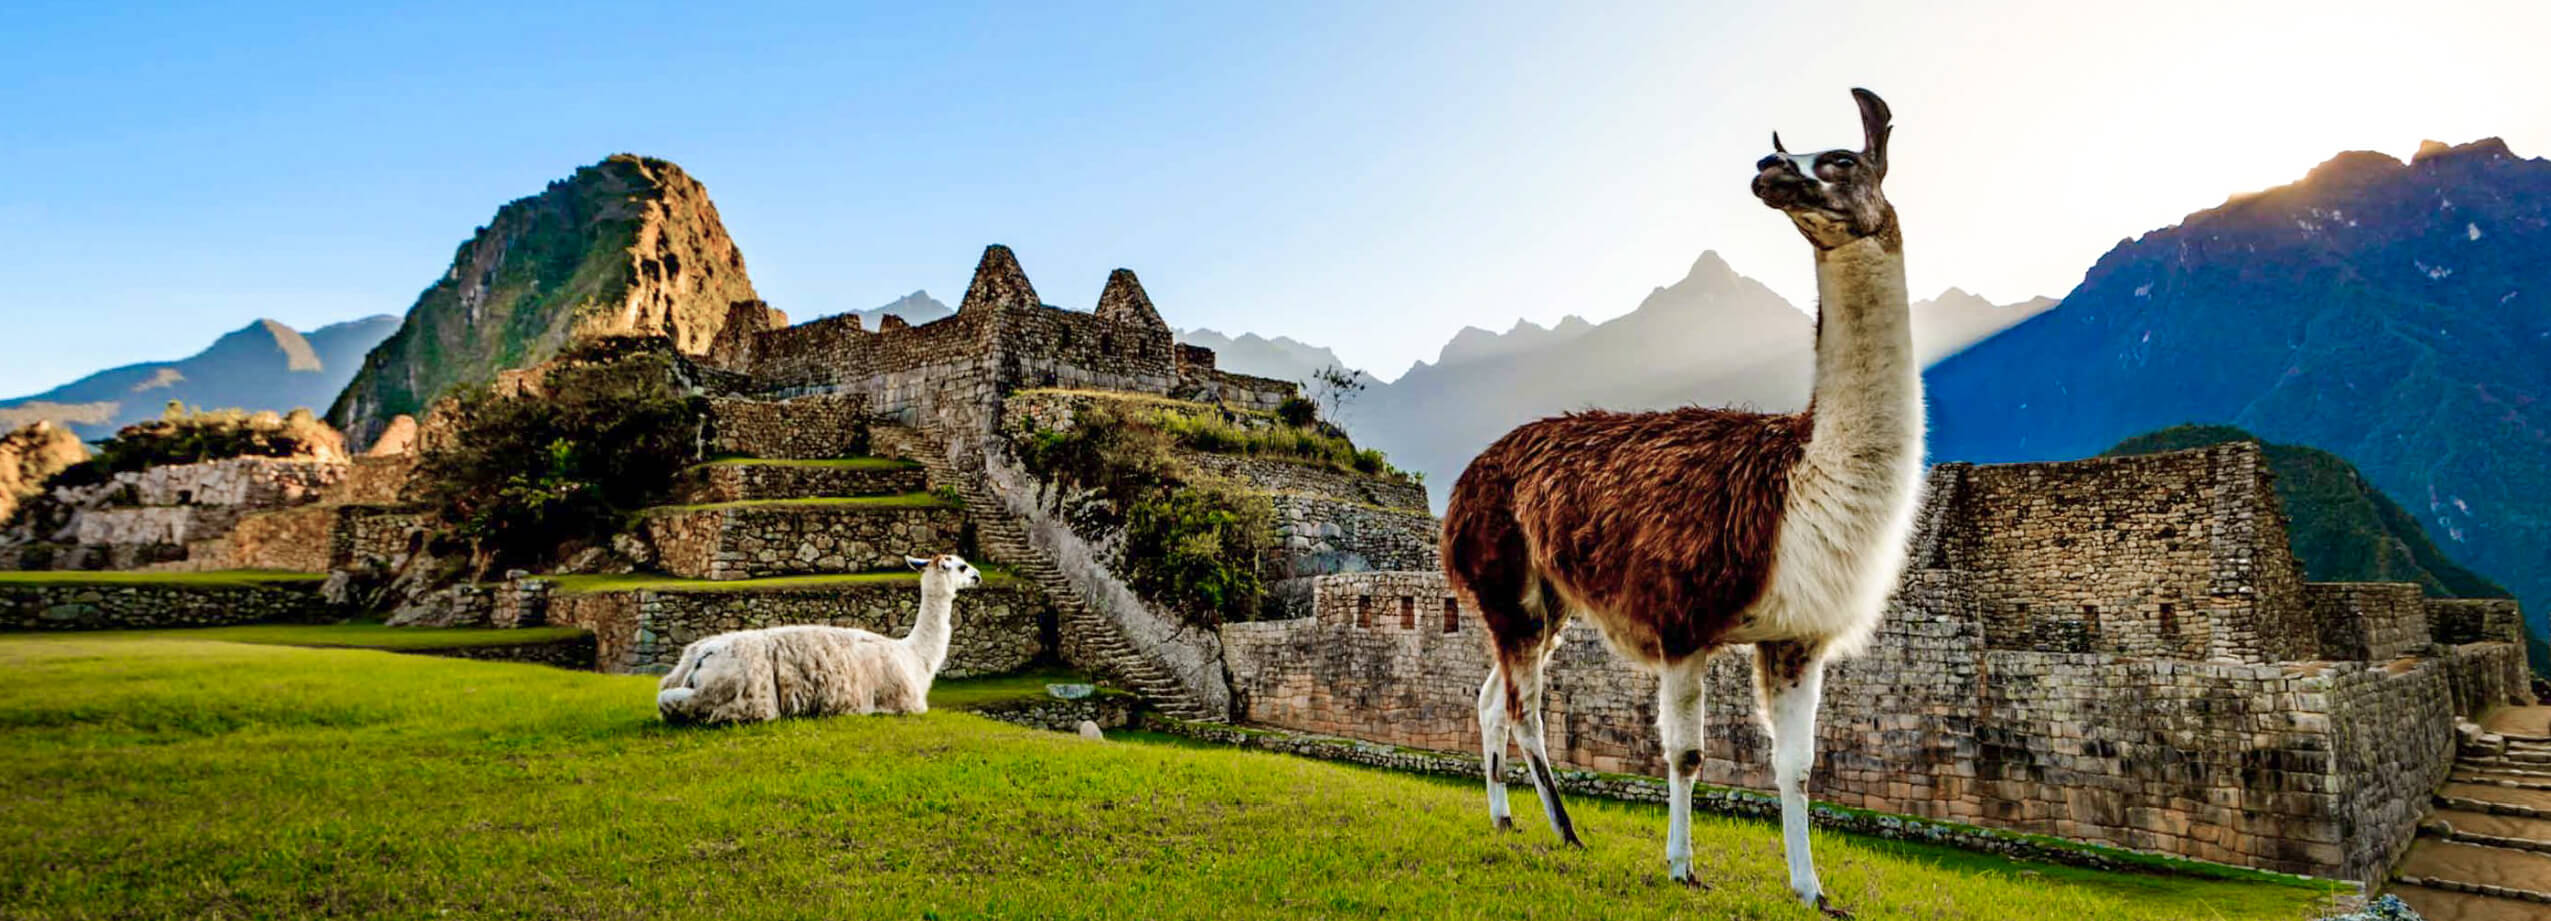 Flora y Fauna de Machu Picchu